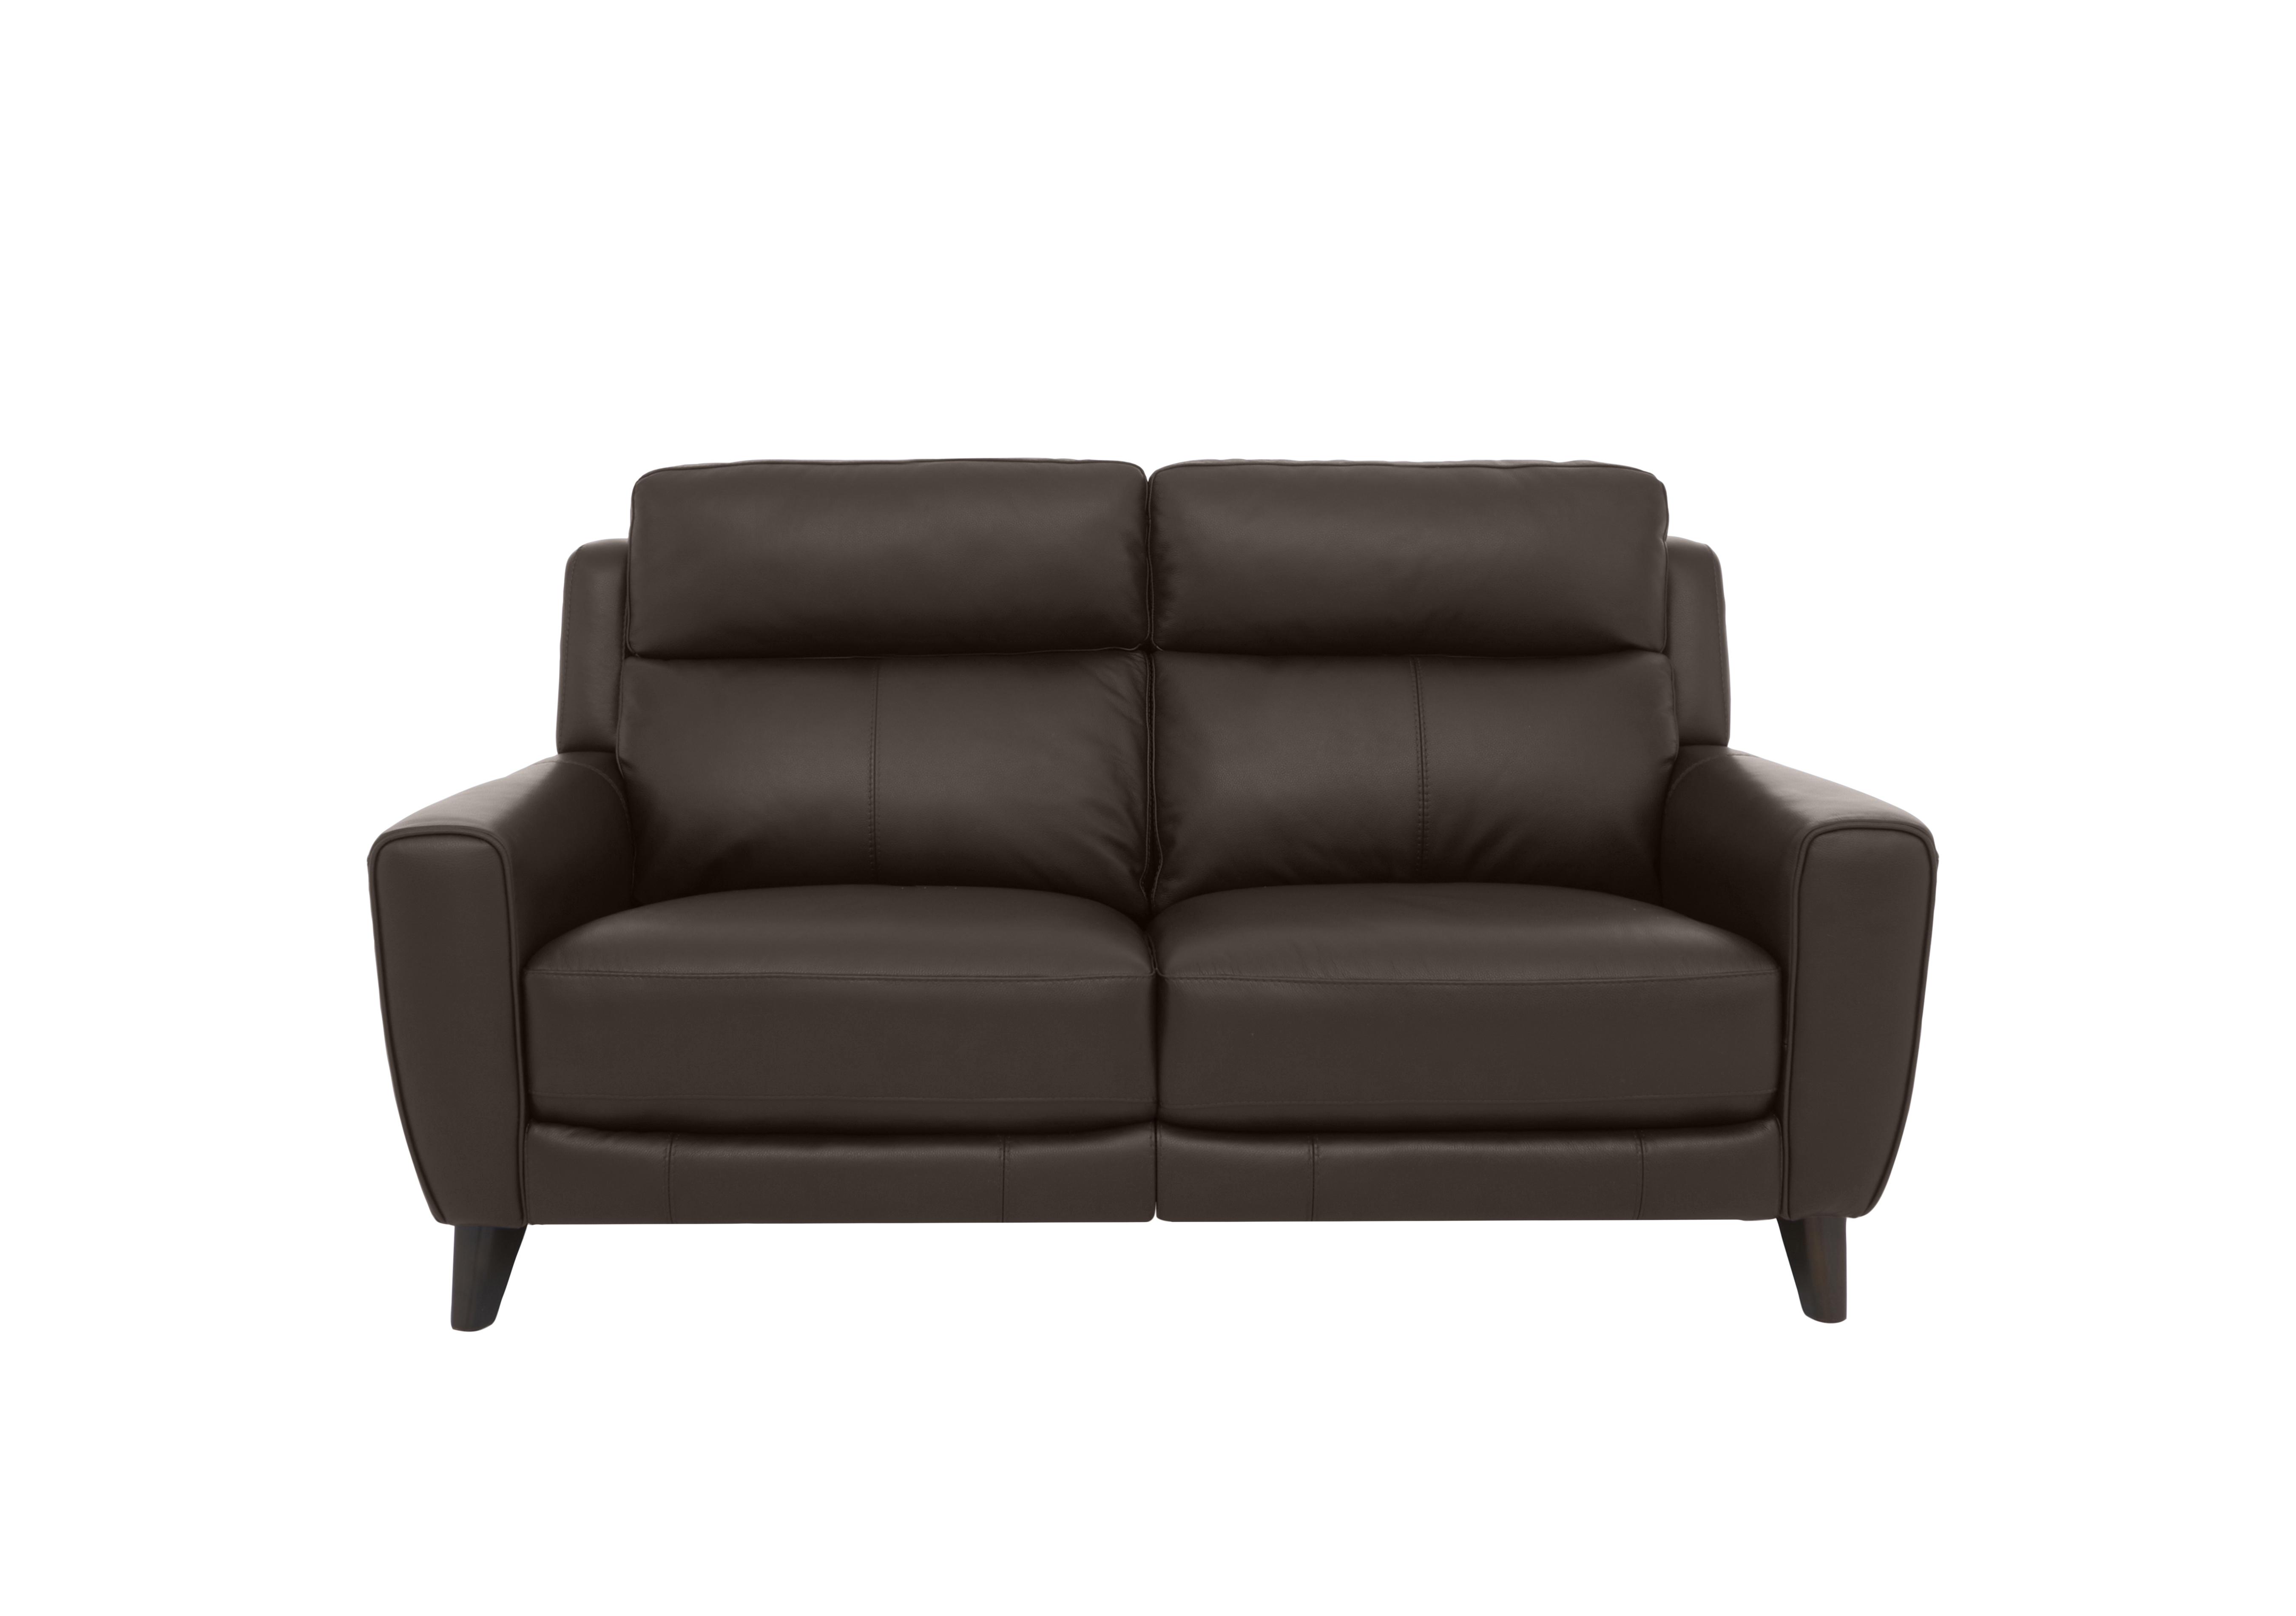 Zen 2 Seater Leather Sofa in Bx-037c Walnut on Furniture Village